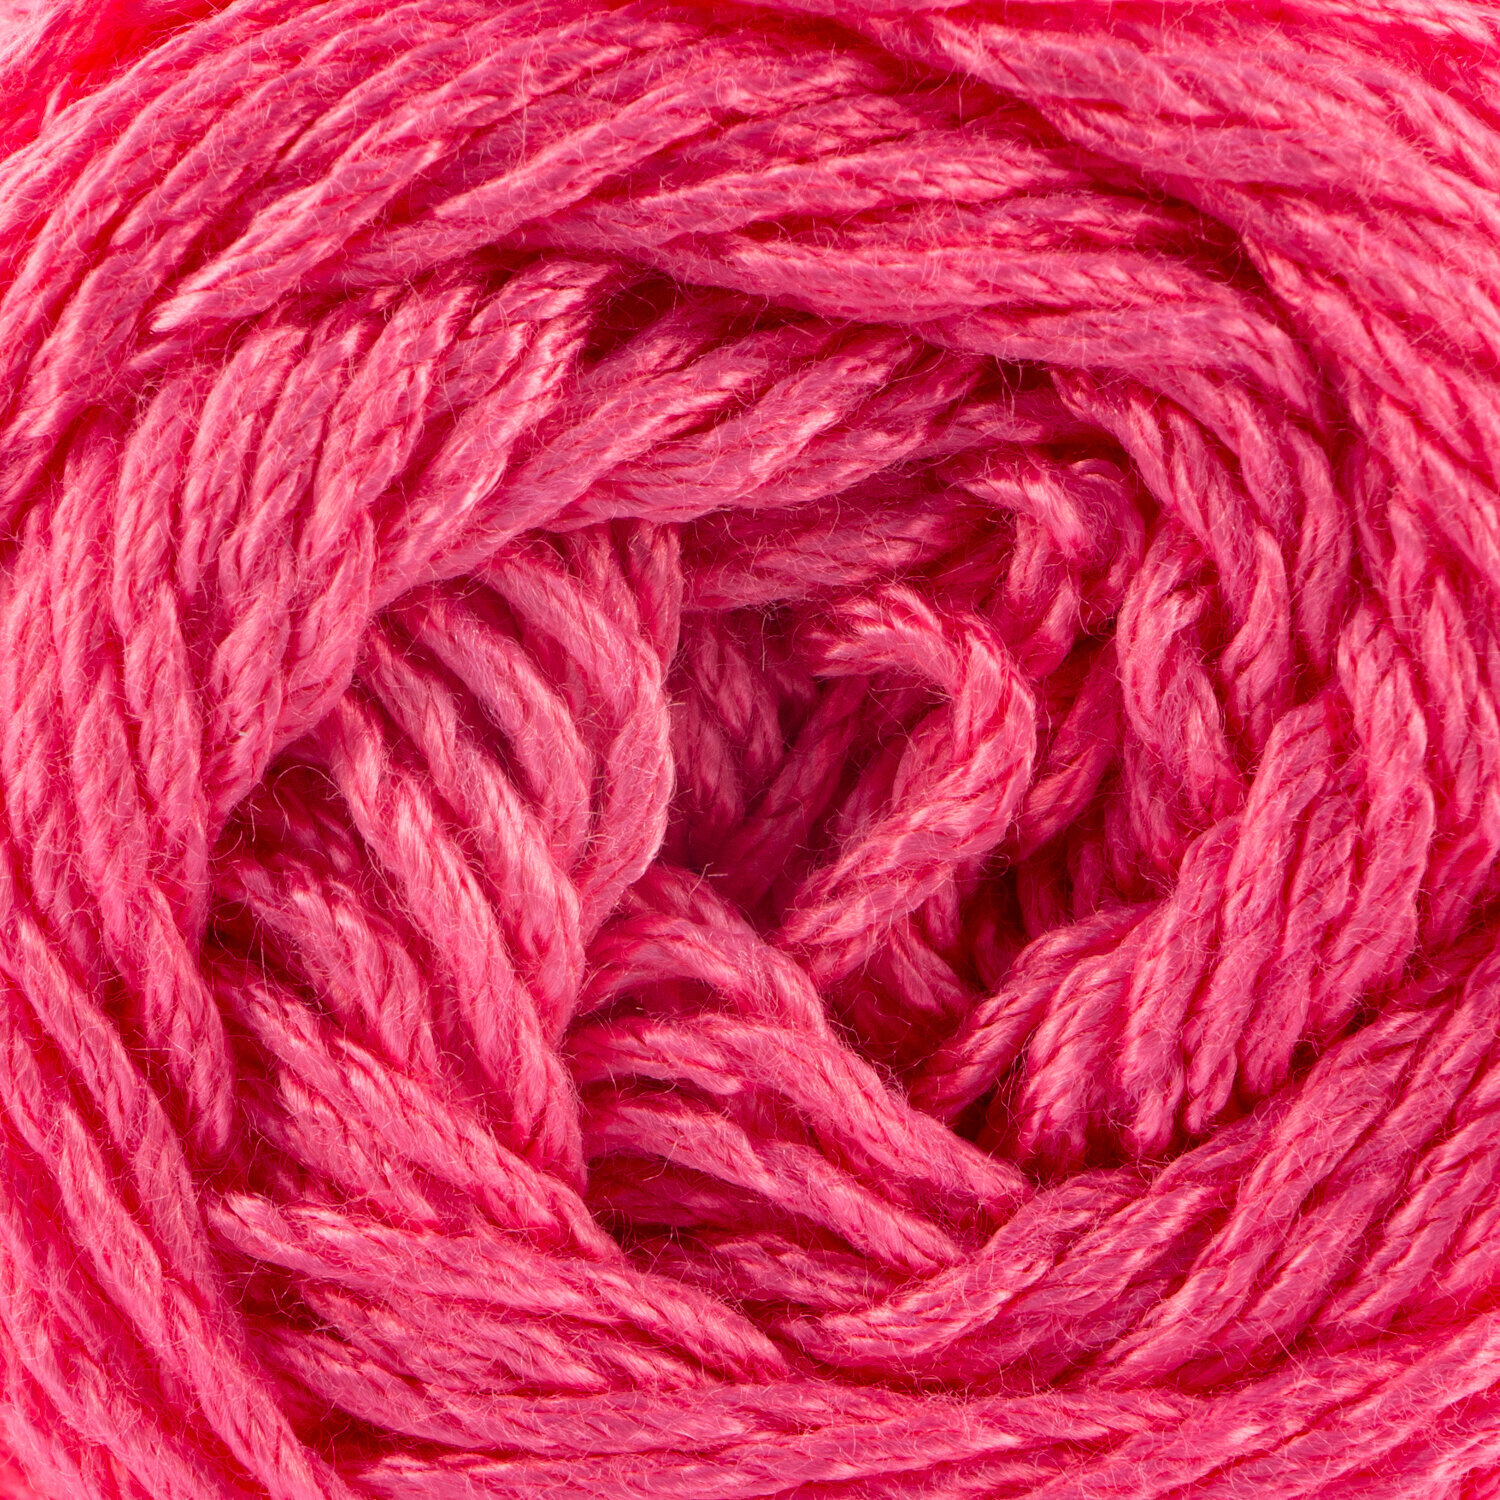 Knitting Yarn Nitarna Ceska Trebova Panda 3334 Pink